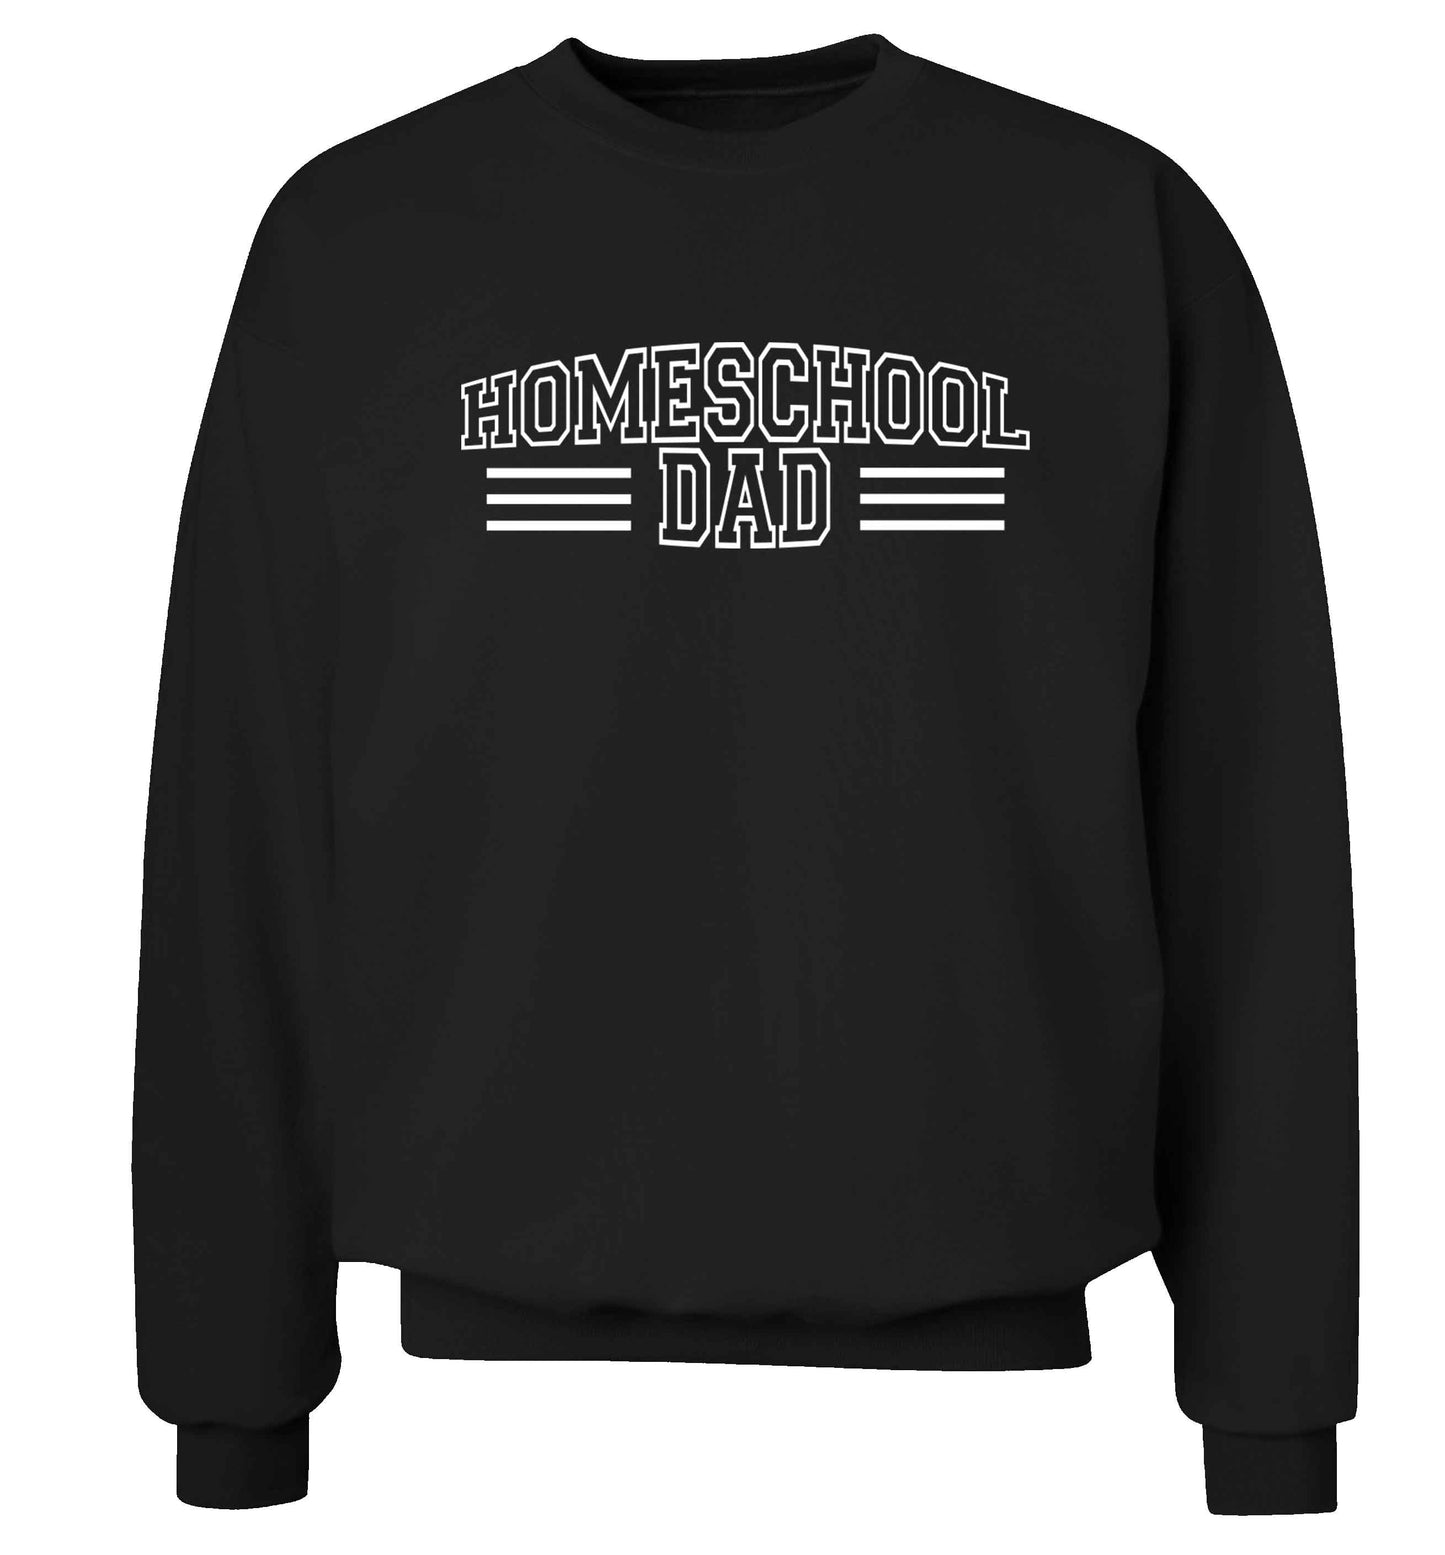 Homeschool dad Adult's unisex black Sweater 2XL